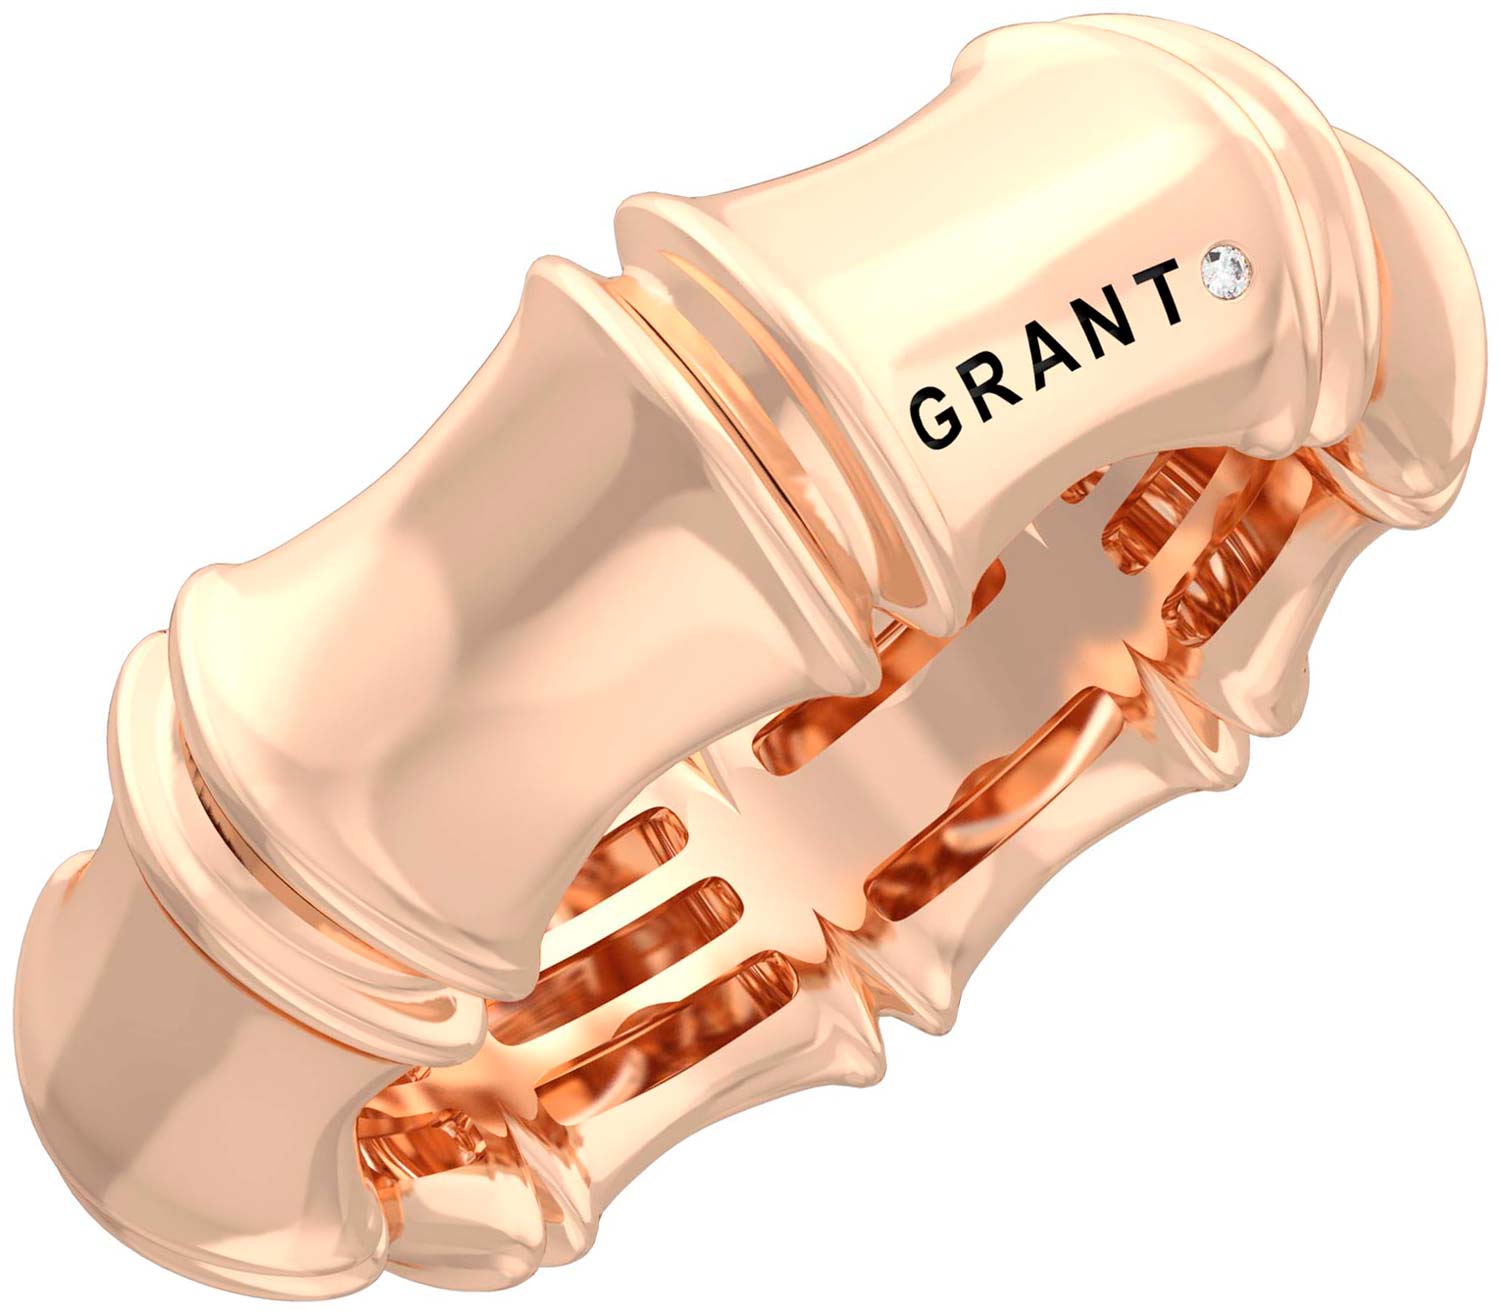   Grant 0177683-gr c 